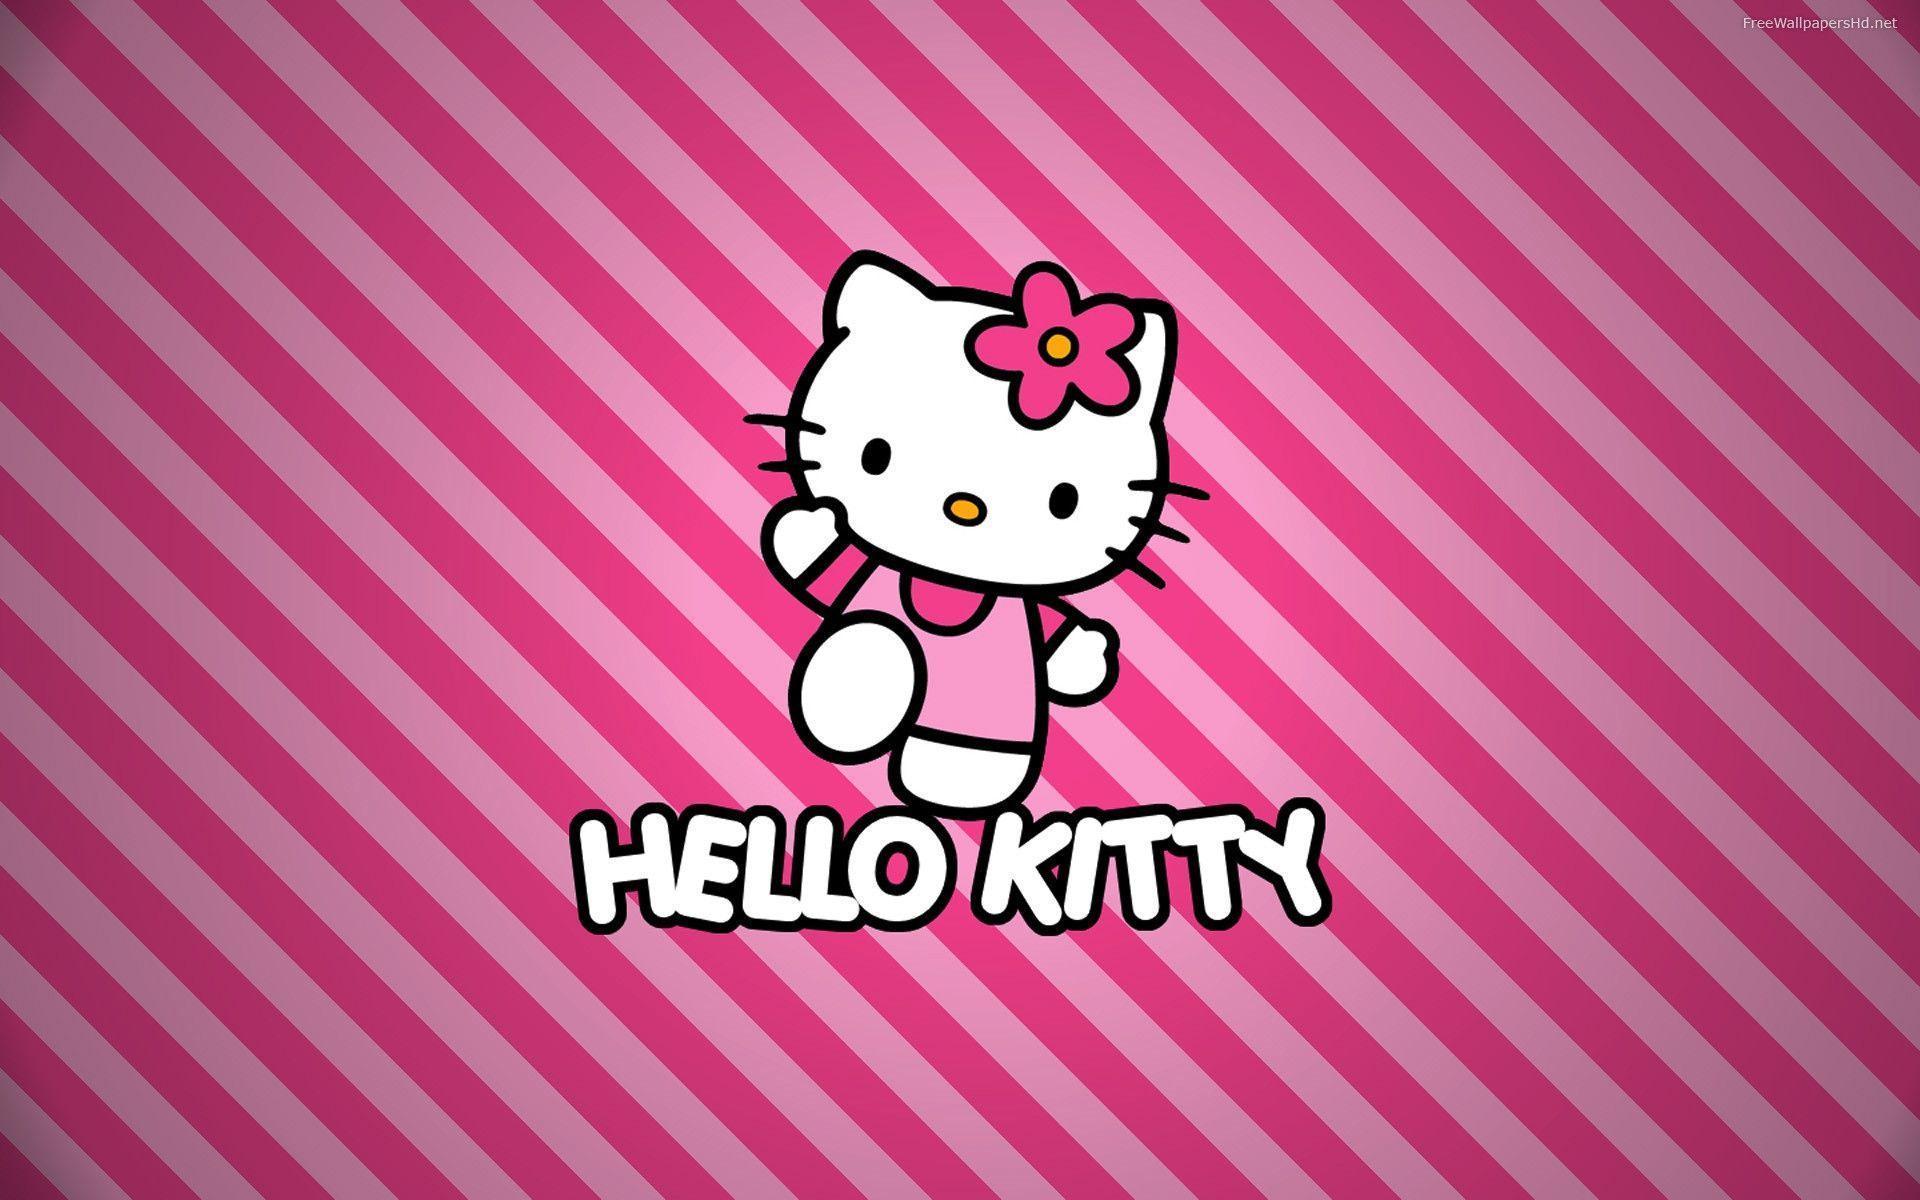 Hello Kitty  HAWAII  Hello kitty art Hello kitty wallpaper Hello kitty  items